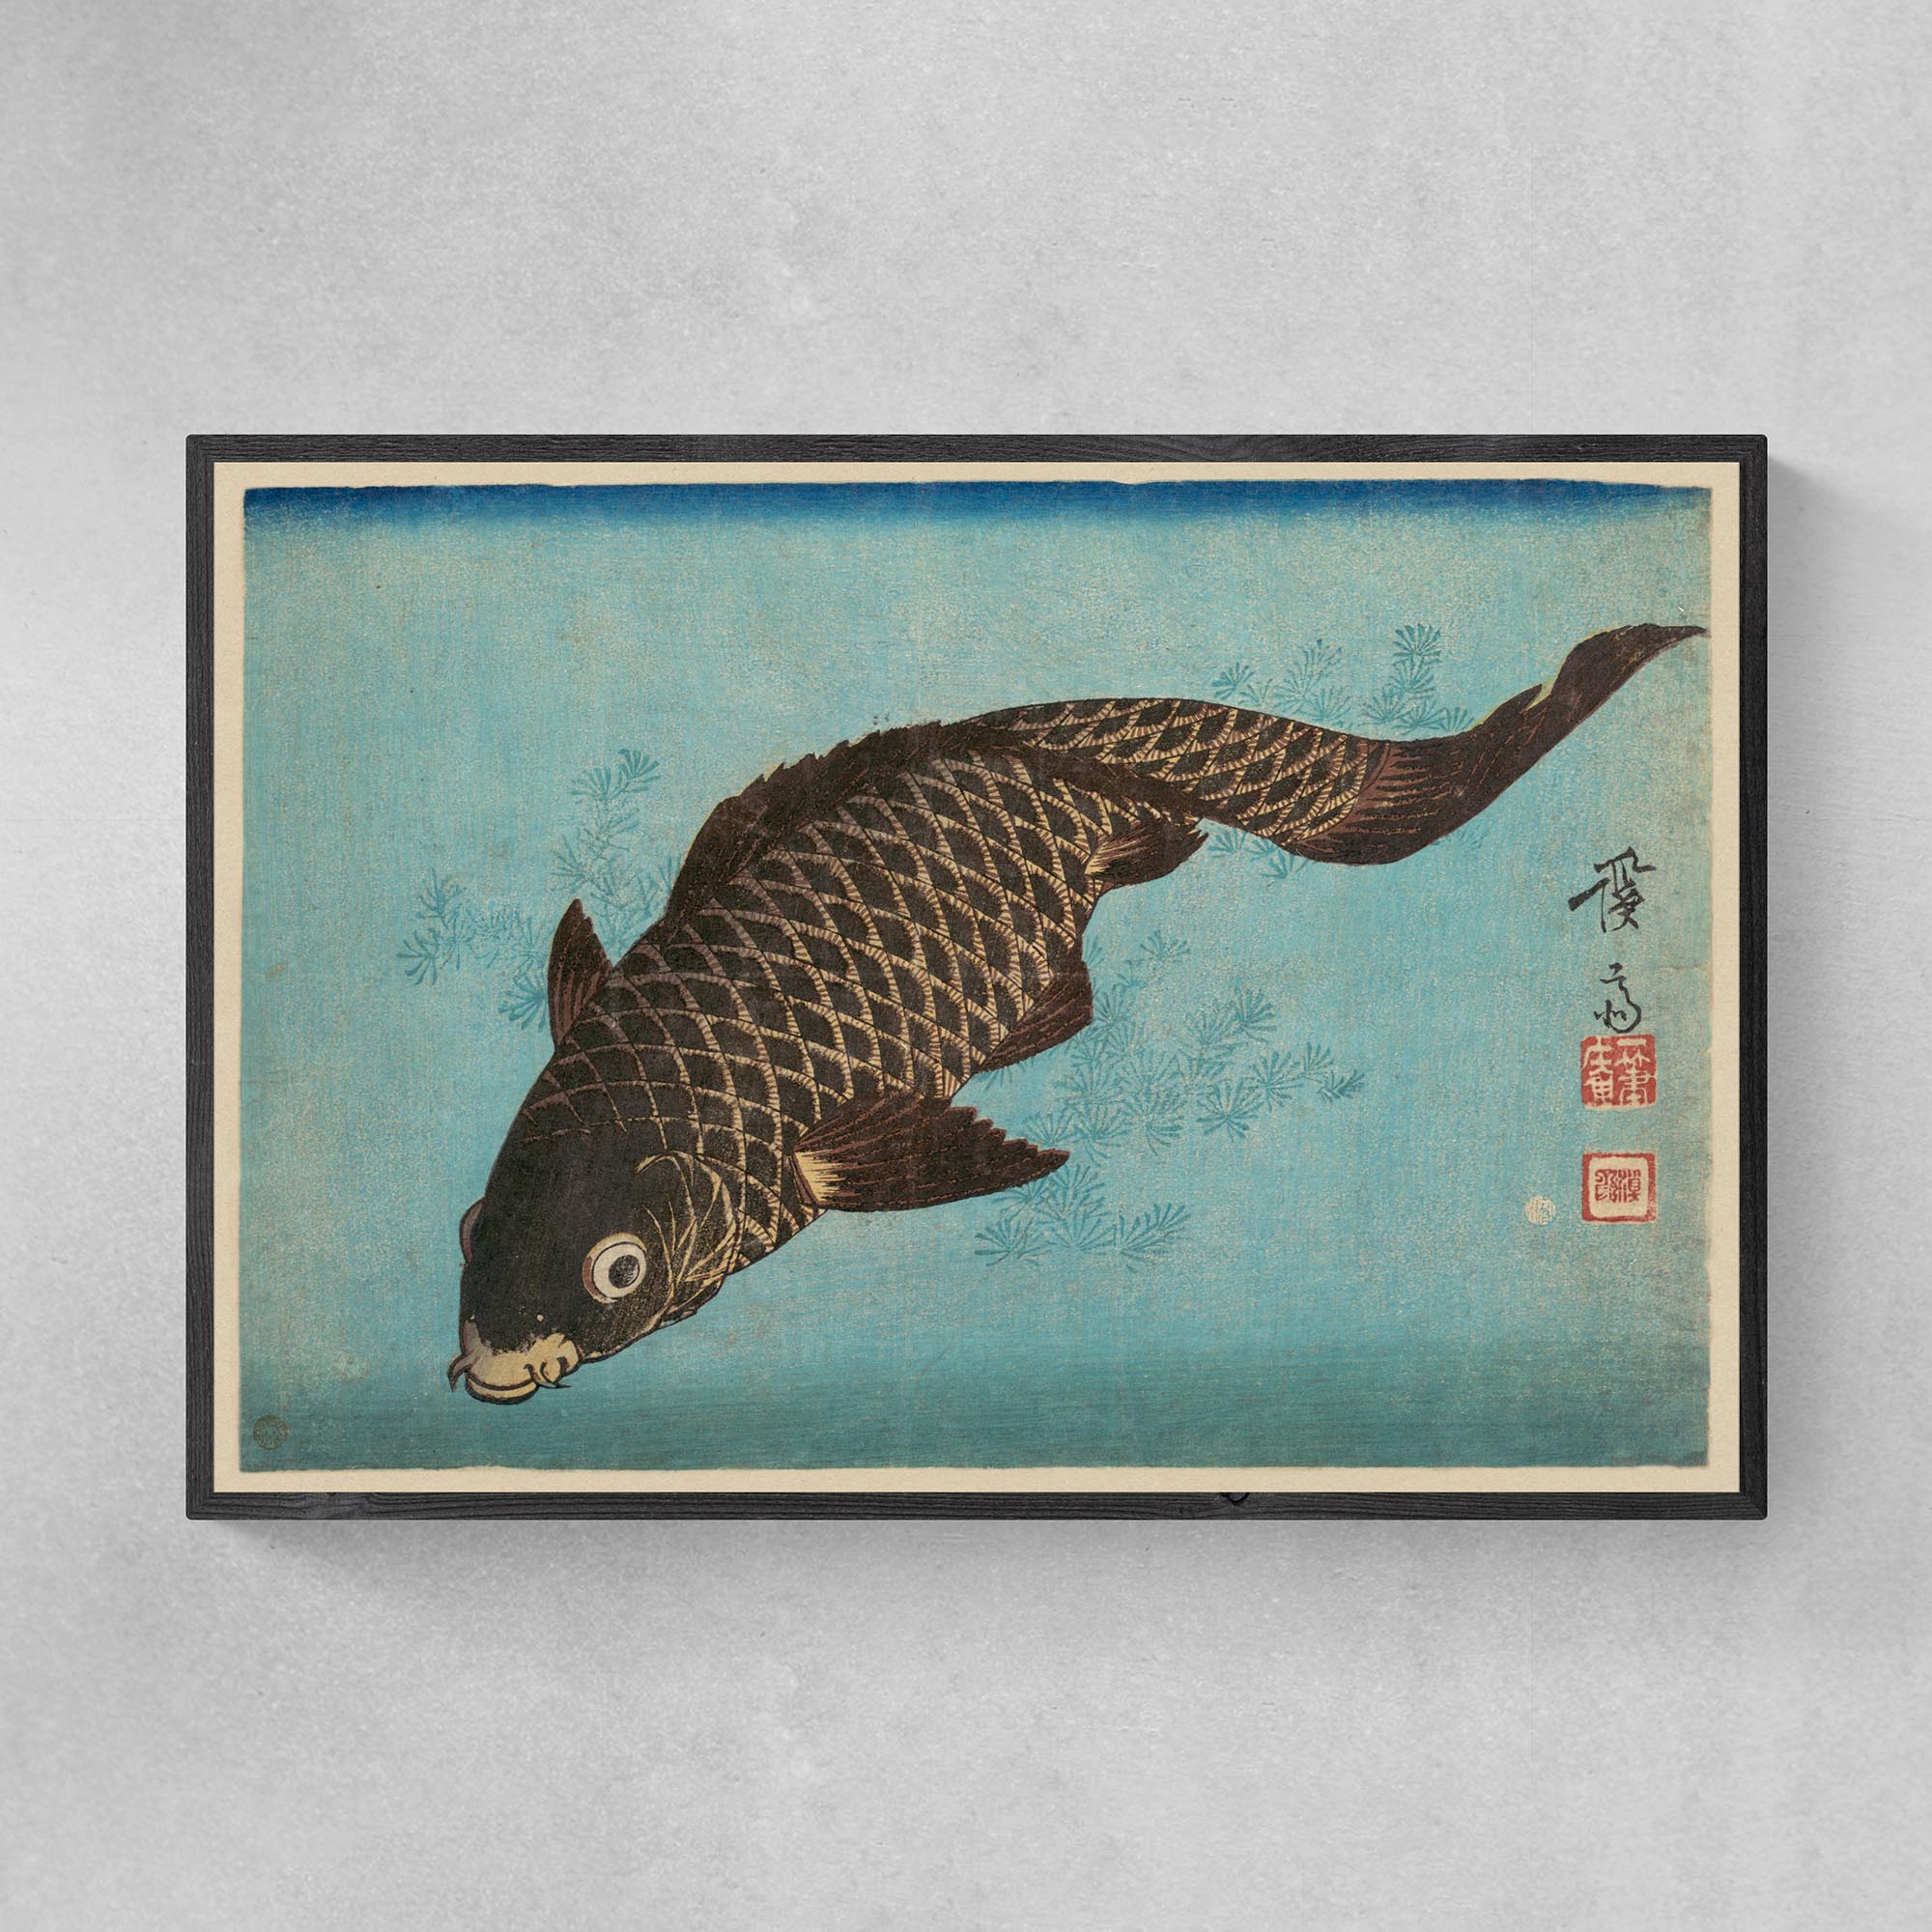 giclee 6"x4" Keisai Eisen Japanese Woodblock Koi, Carp, Ukiyo-e Marine Life Antique Fine Art Print